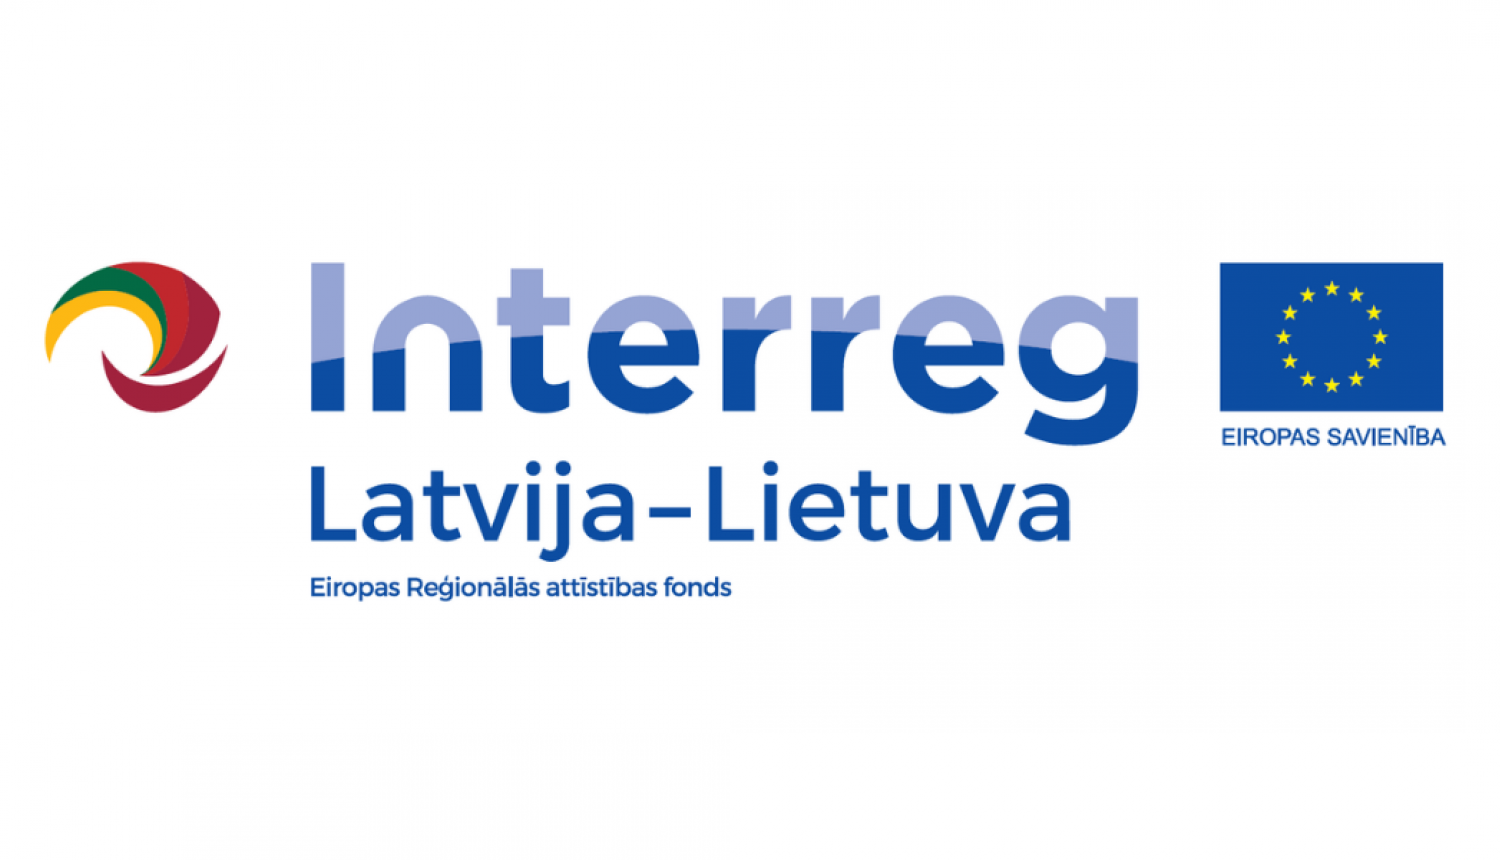 INTERREG logo